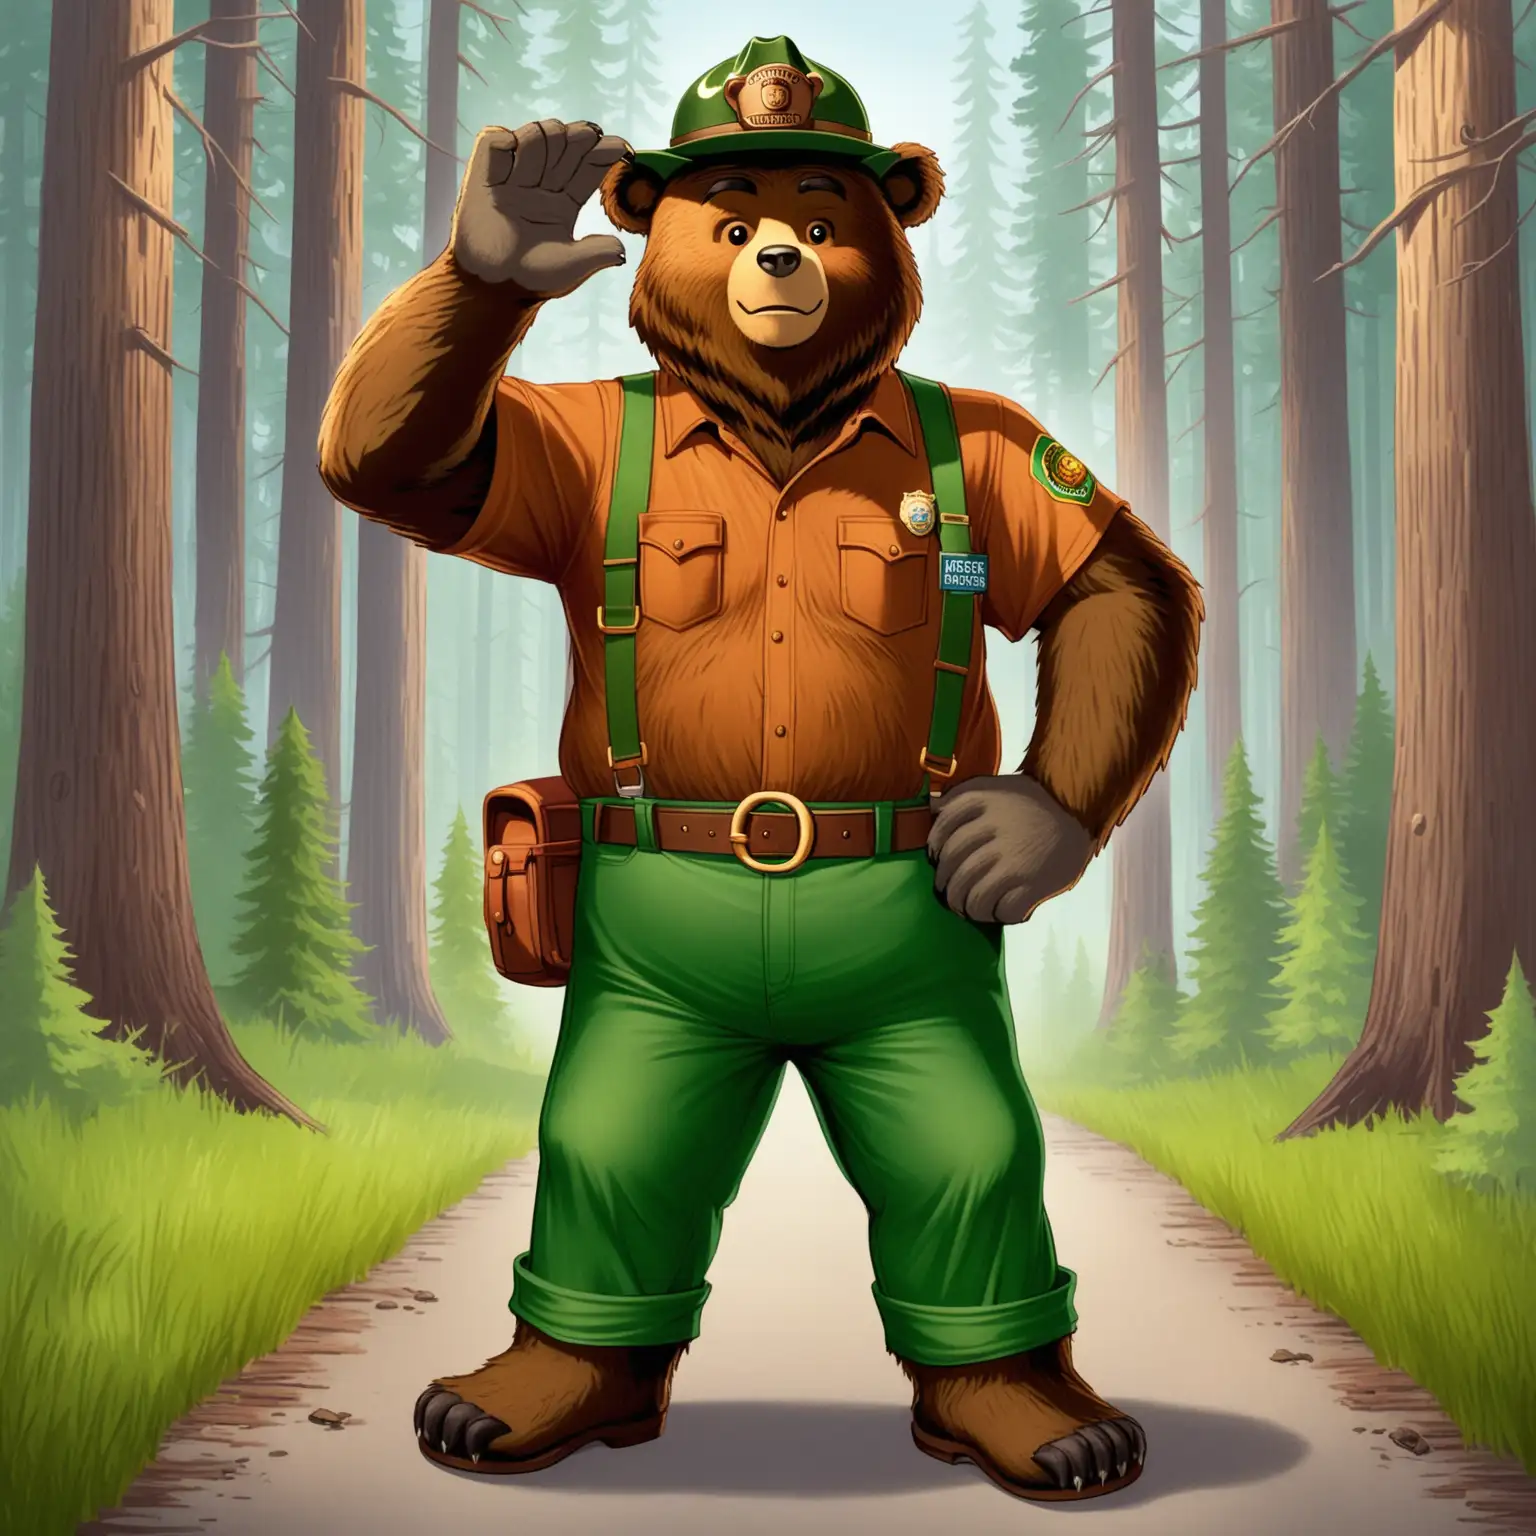 Smokey the bear in green pants


